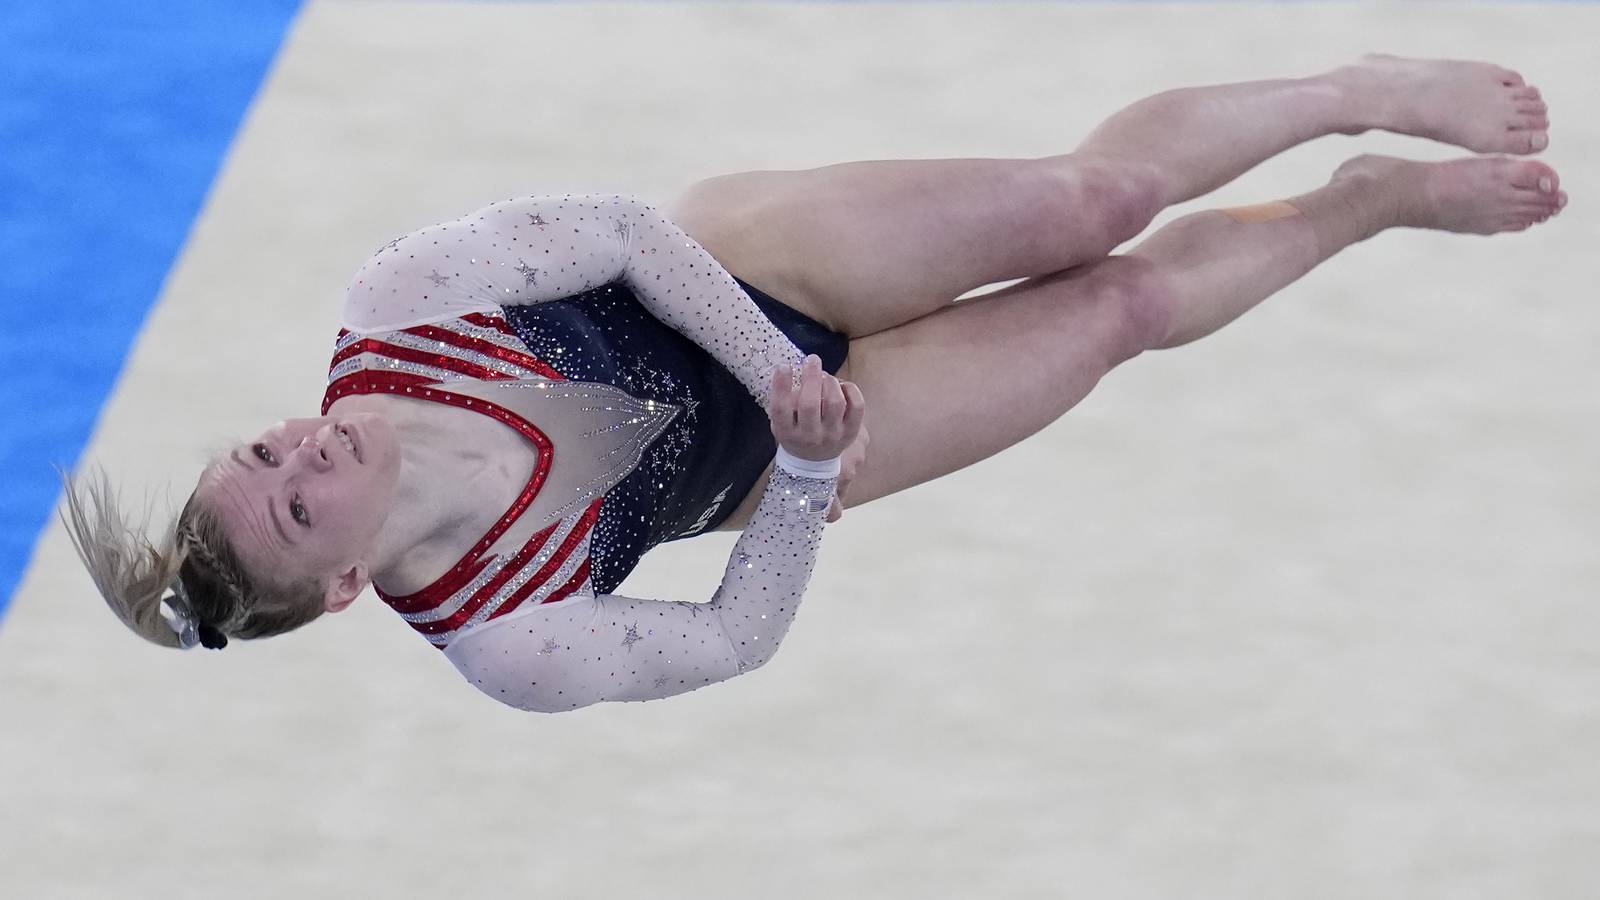 US gymnast Jade Carey wins gold in floor exercise final at Tokyo